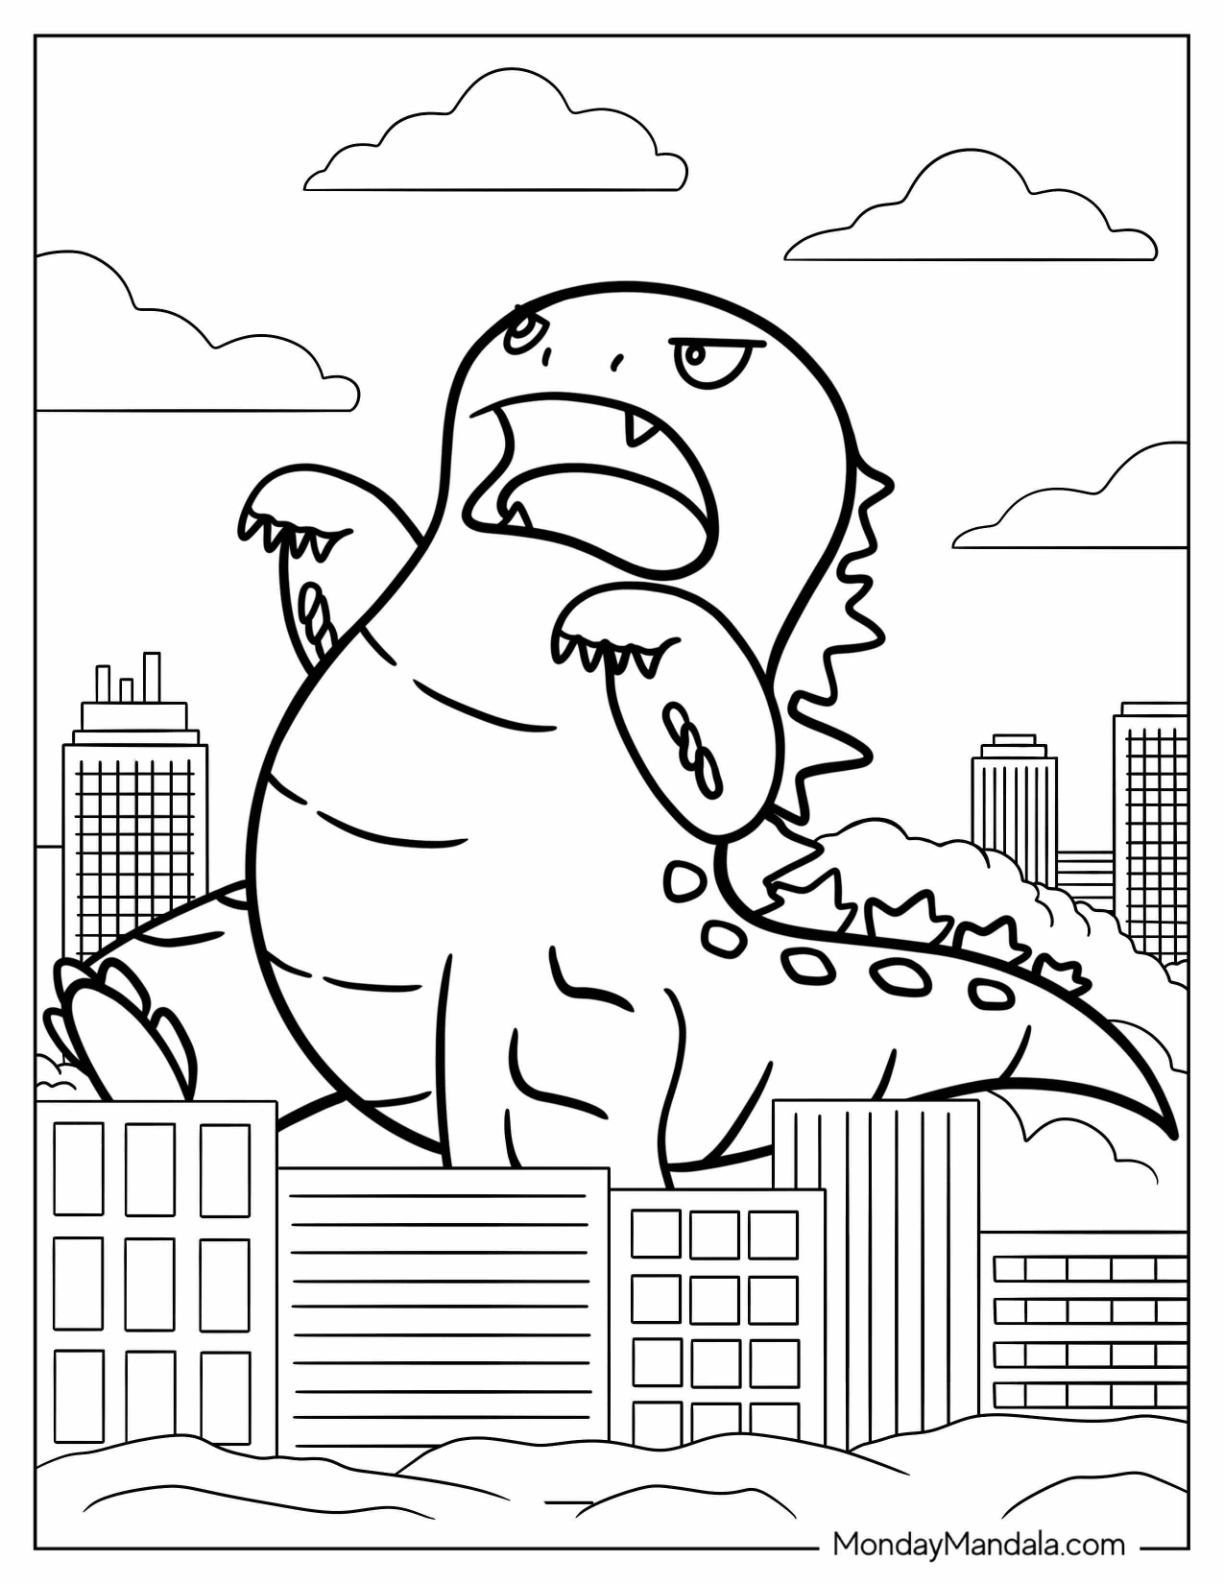 Godzilla coloring pages free pdf printables